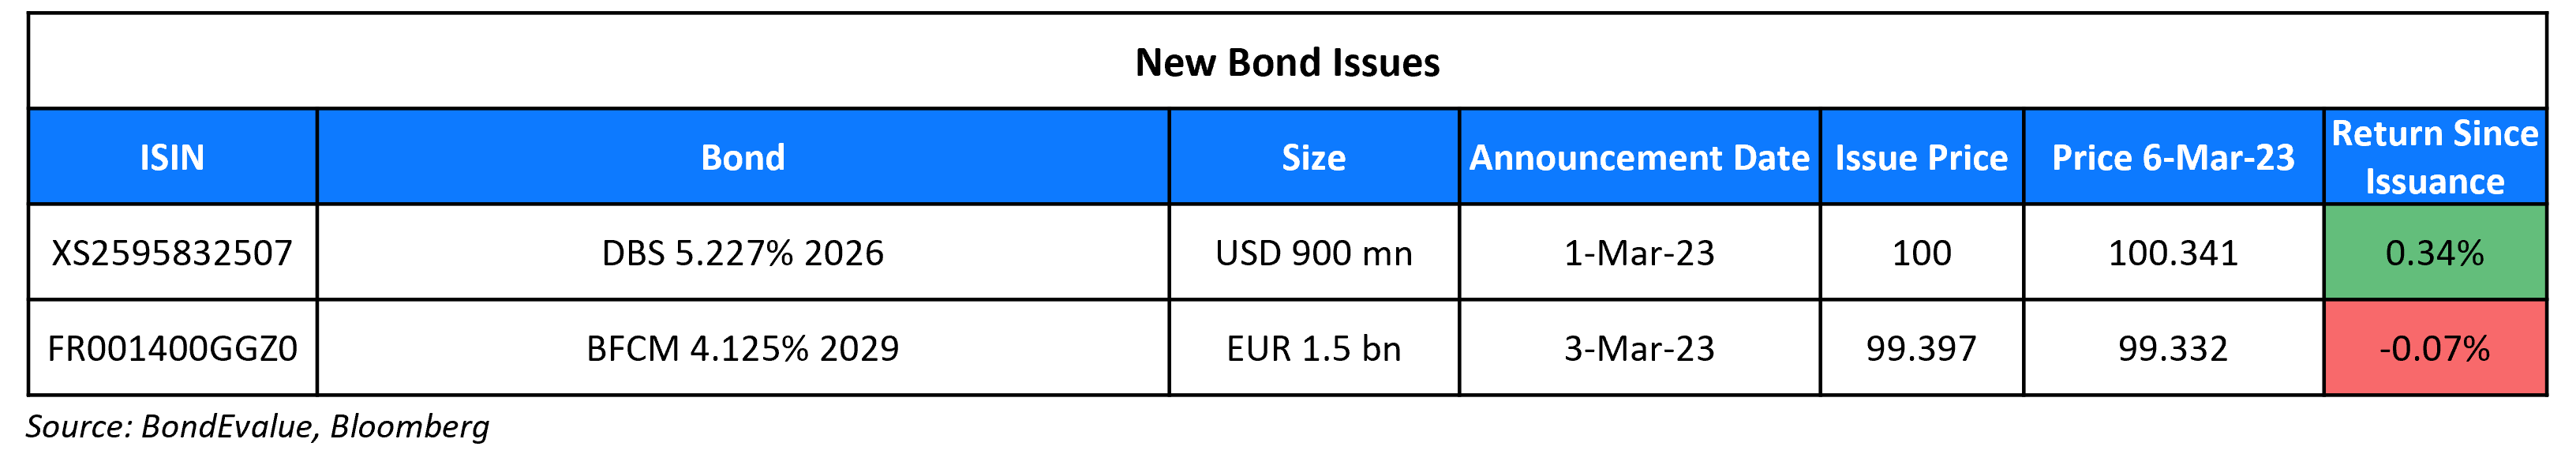 New Bond Issues 6 Mar 23